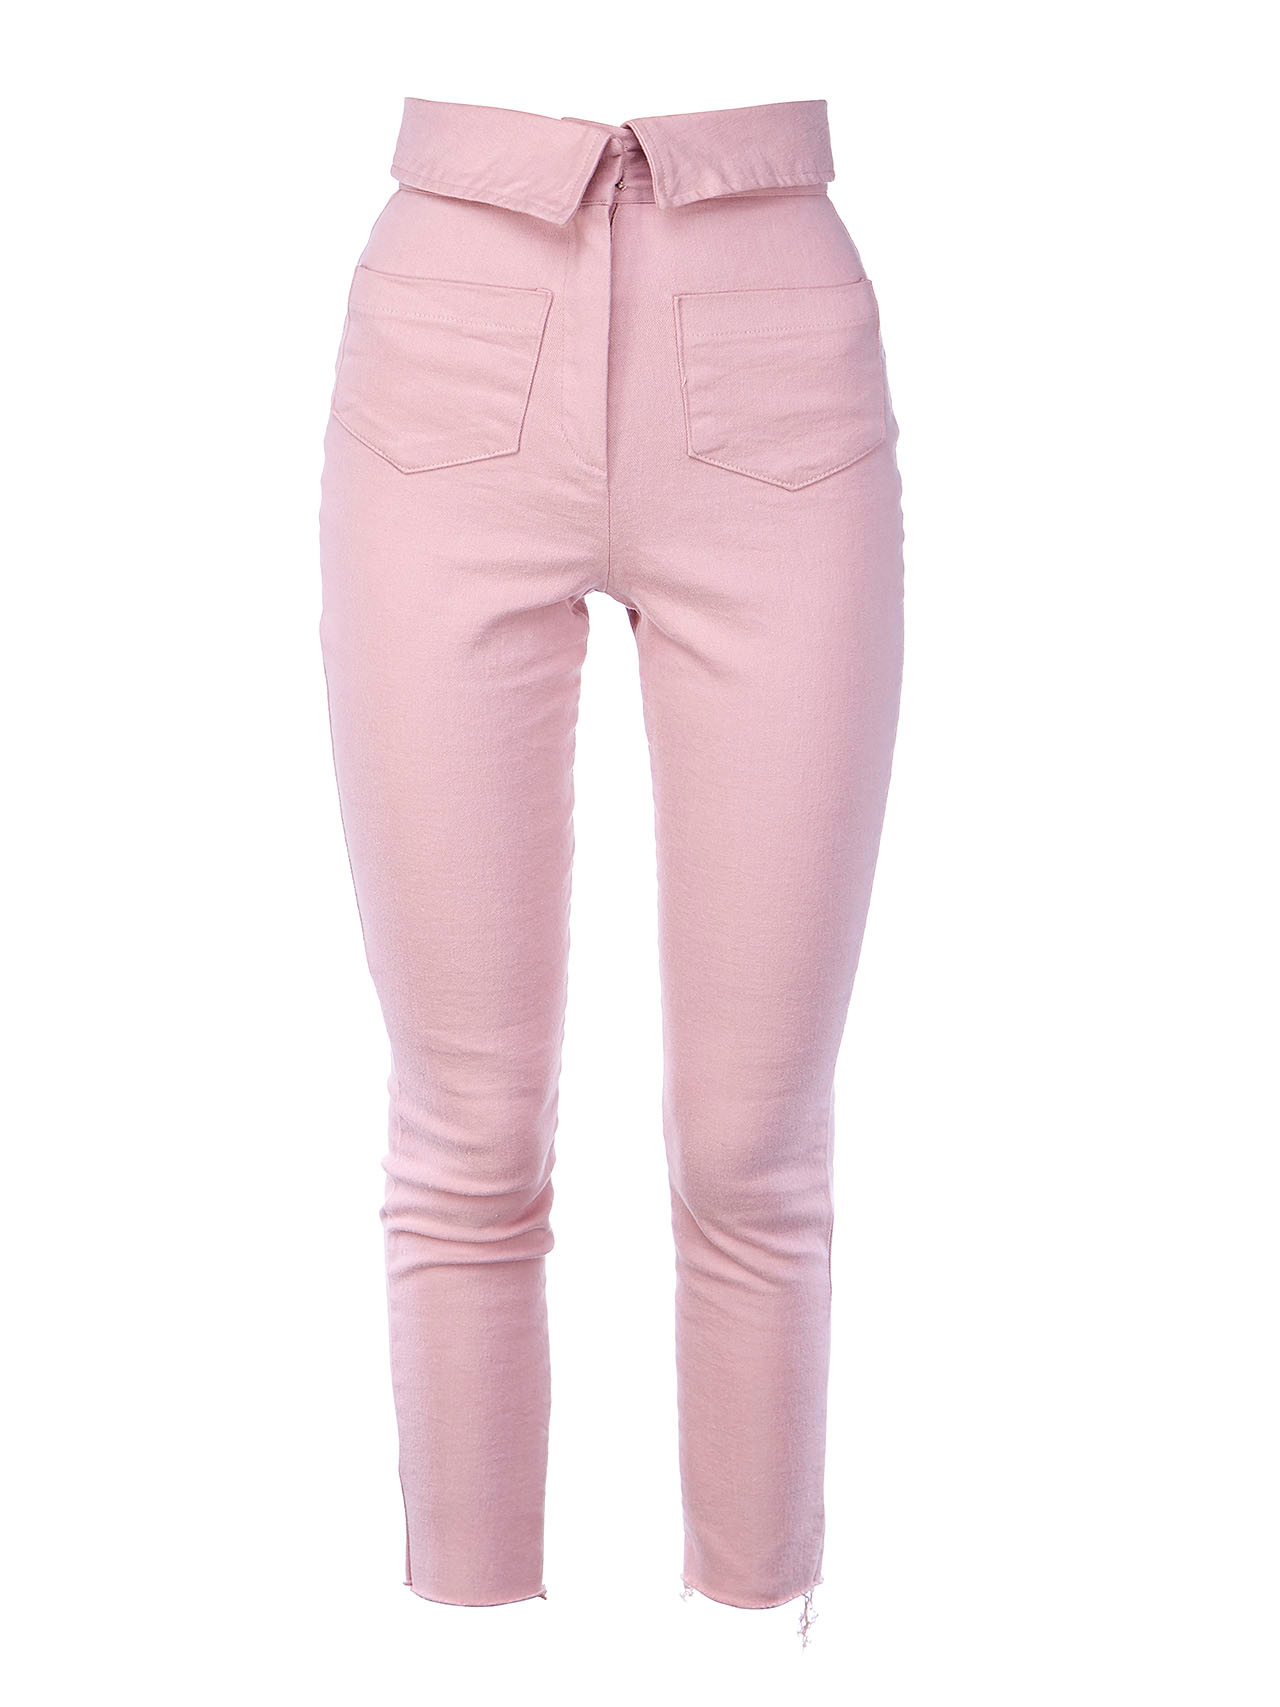 Sleek Jeans Pink